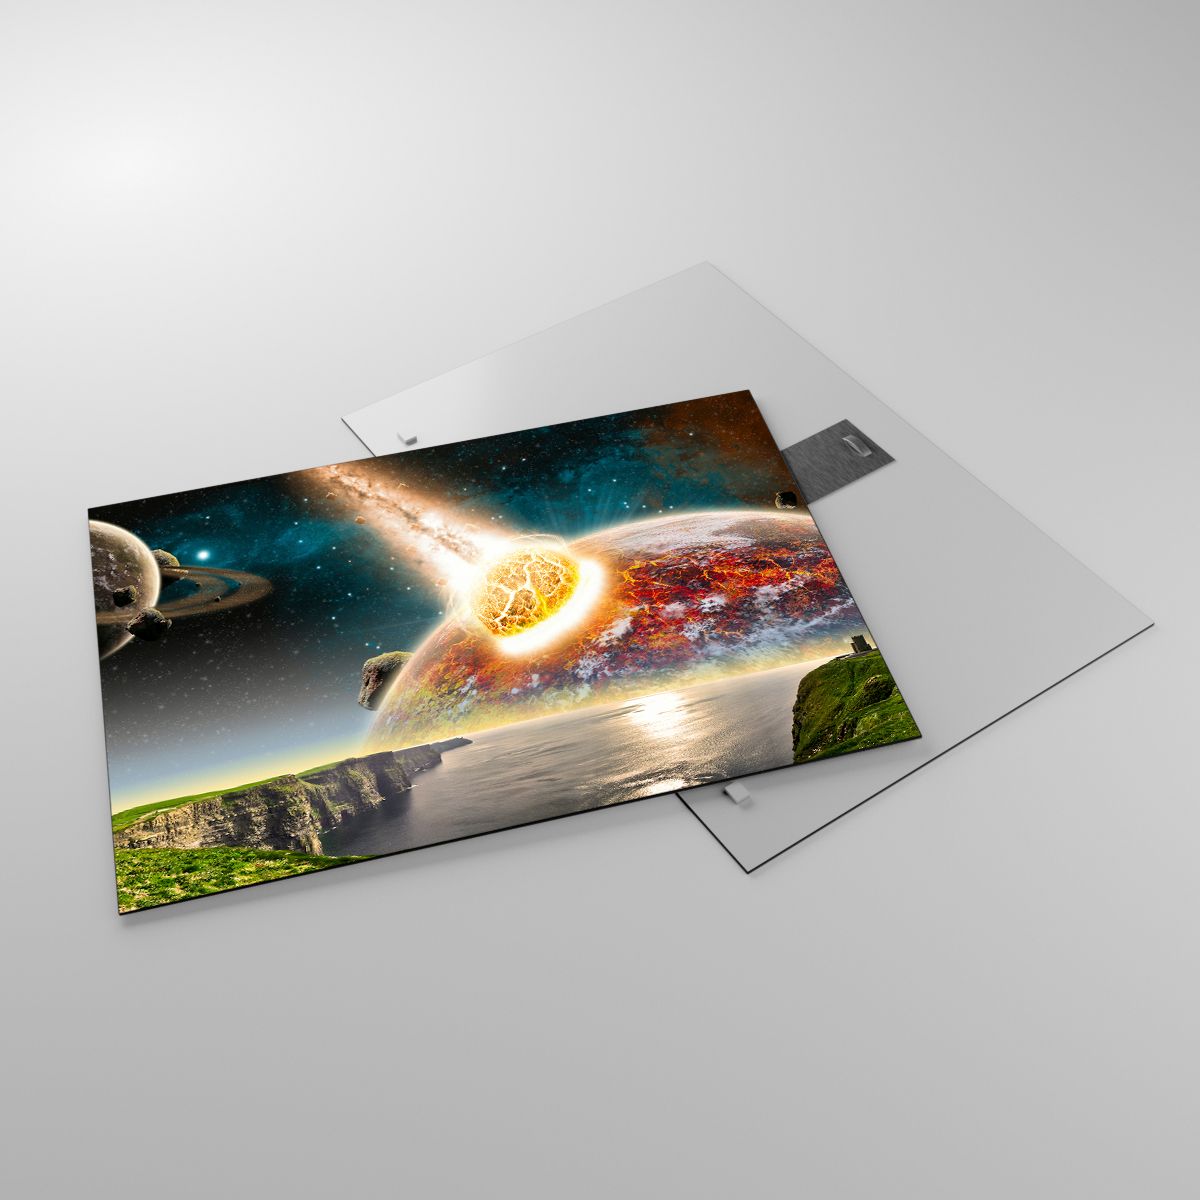 Glasbild Abstraktion, Glasbild Landschaft, Glasbild Kosmos, Glasbild Galaxis, Glasbild Komet